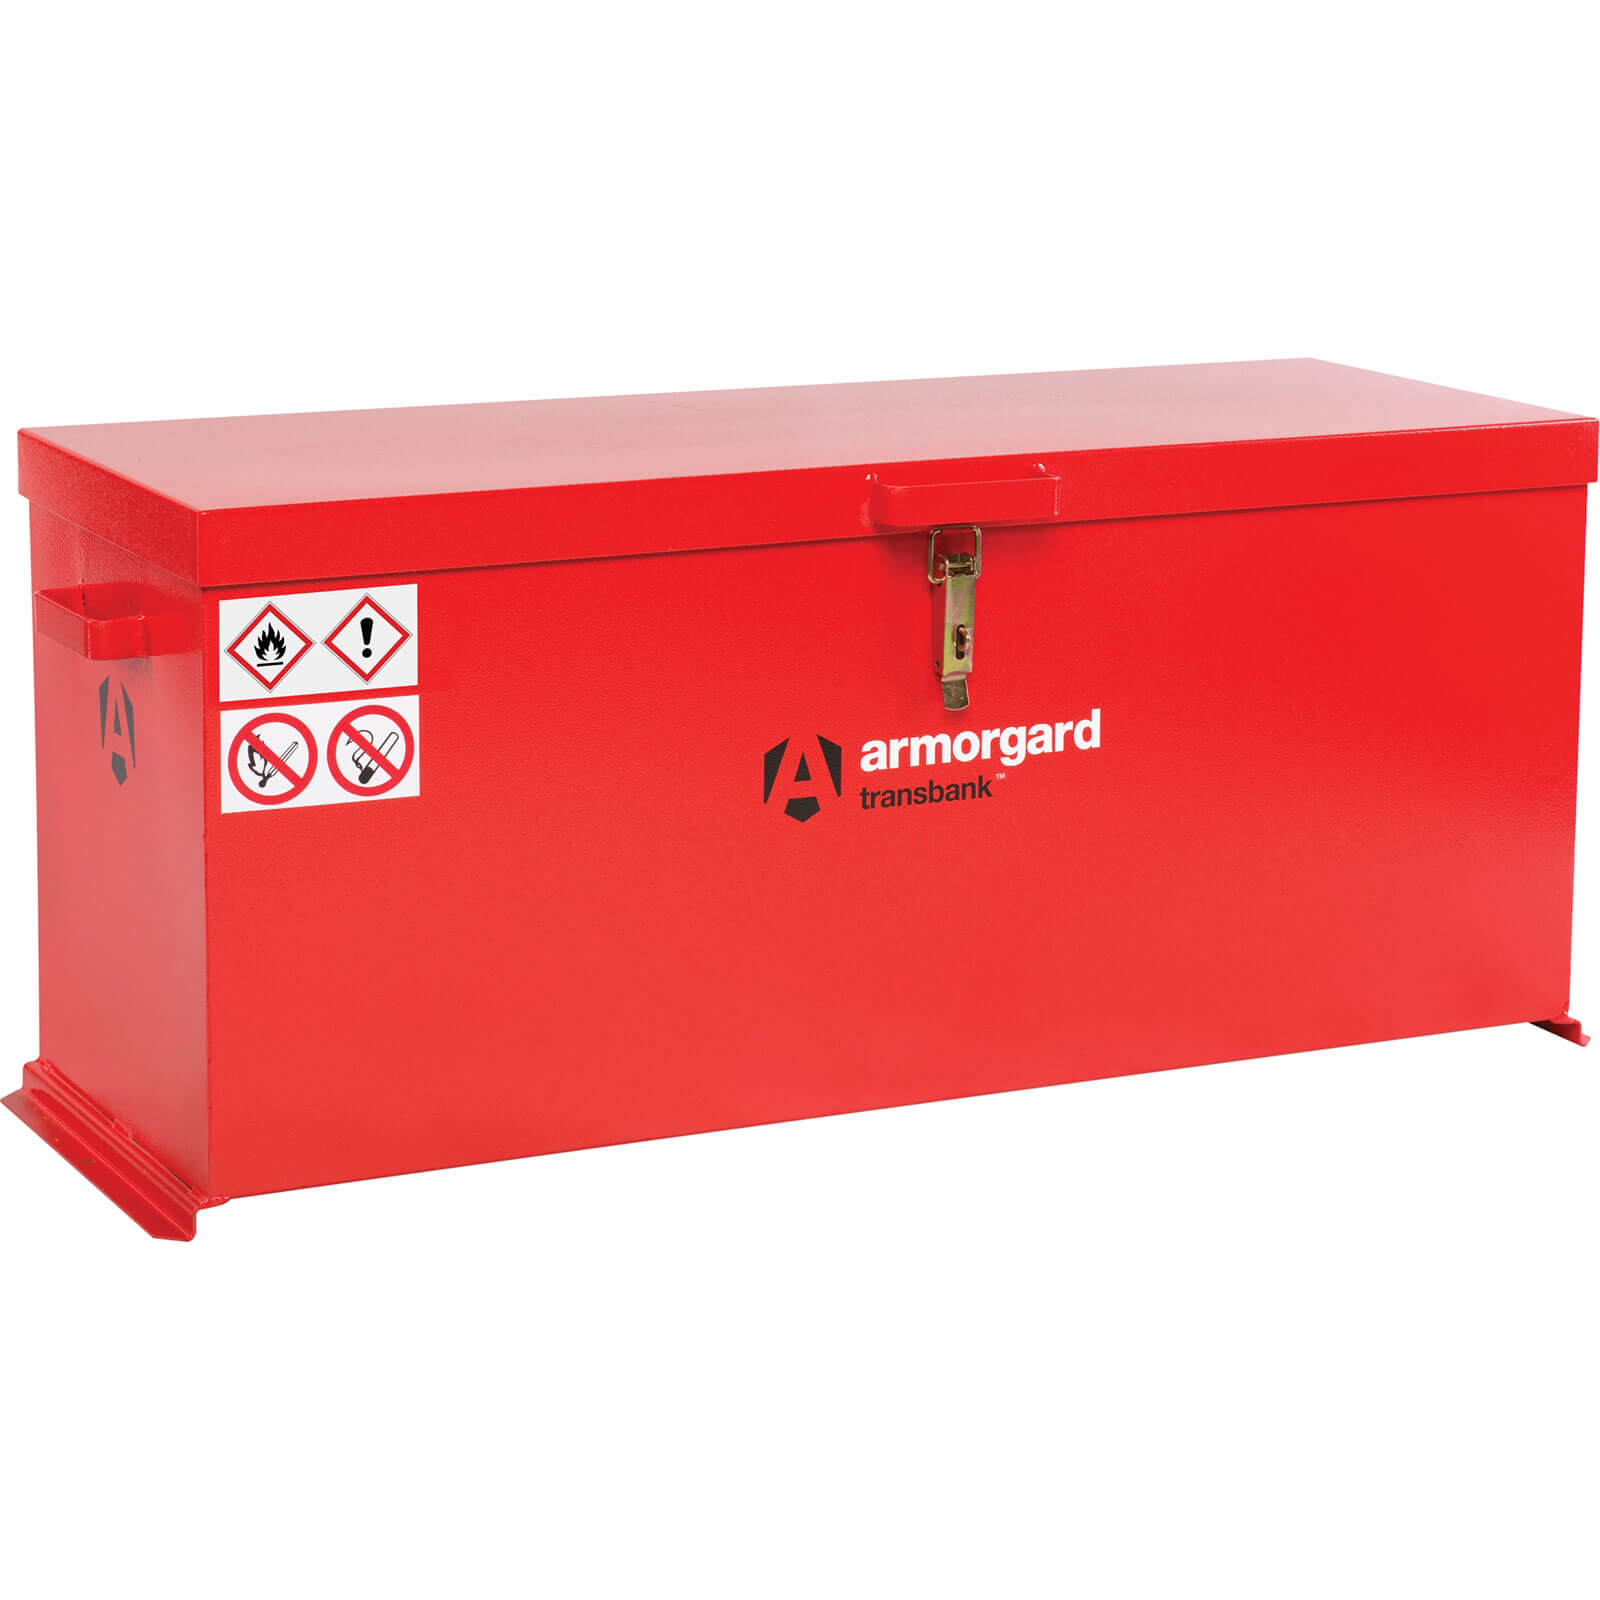 Photo of Armorgard Transbank Hazardous Goods Secure Storage Box 1196mm 485mm 540mm